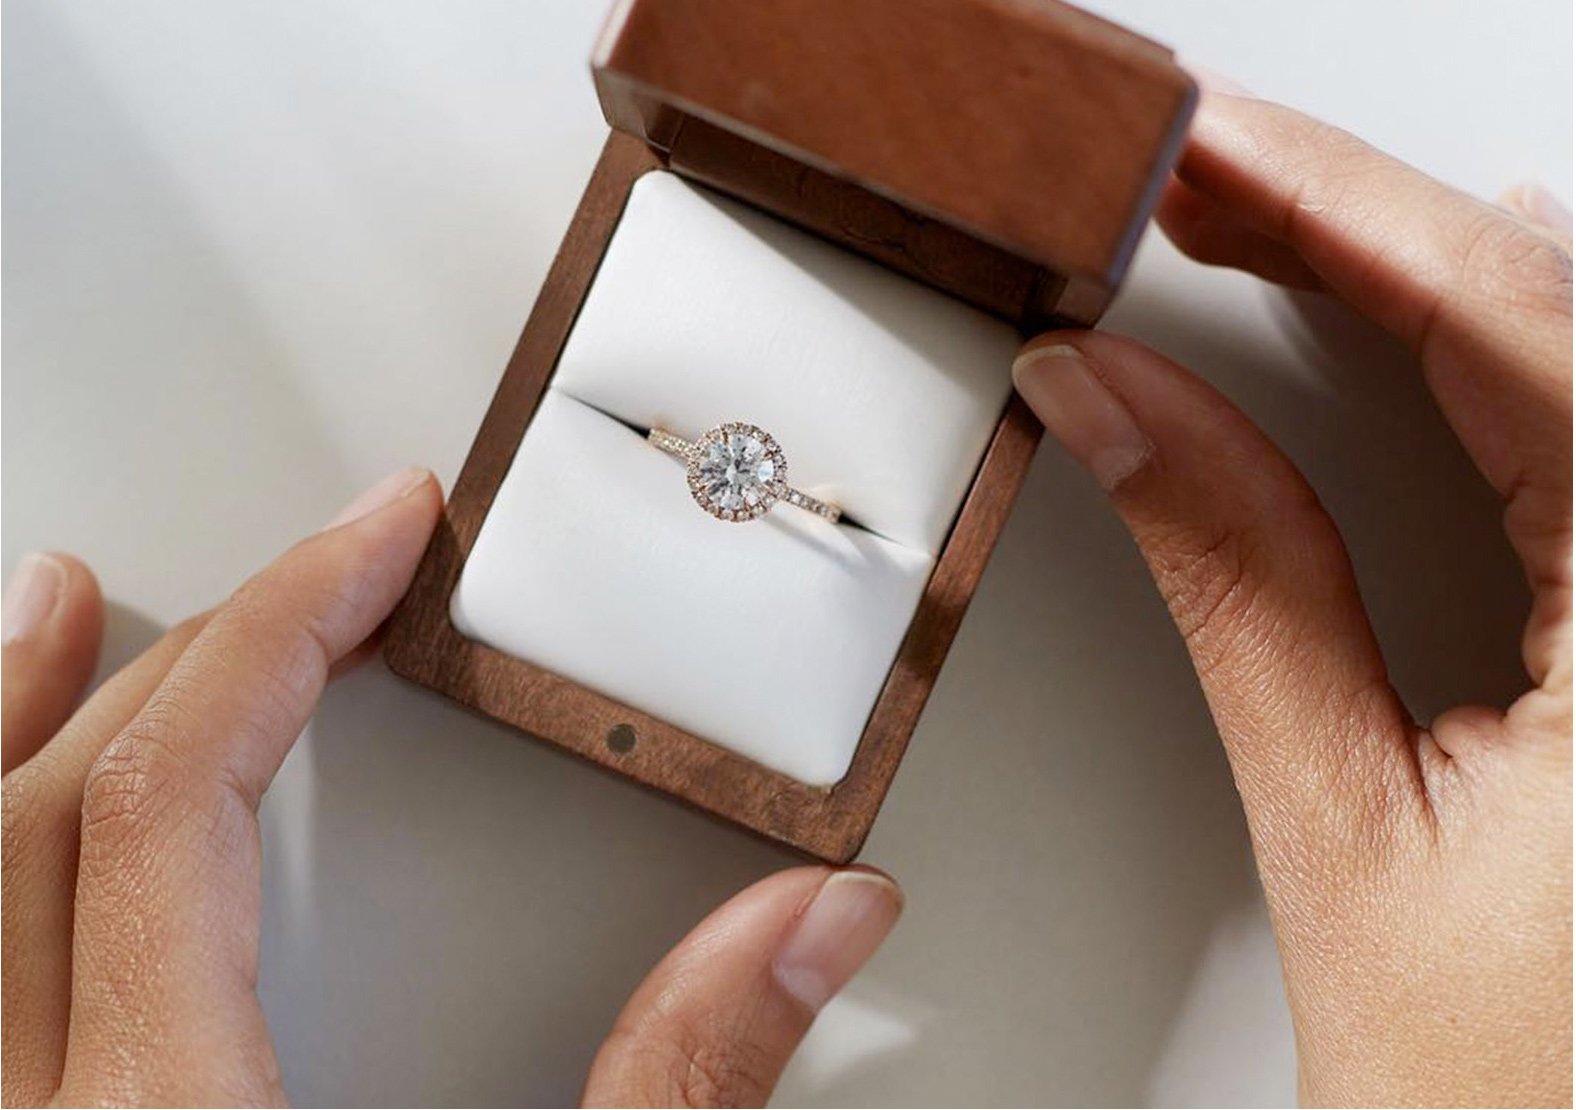 Diamond engagement ring in box